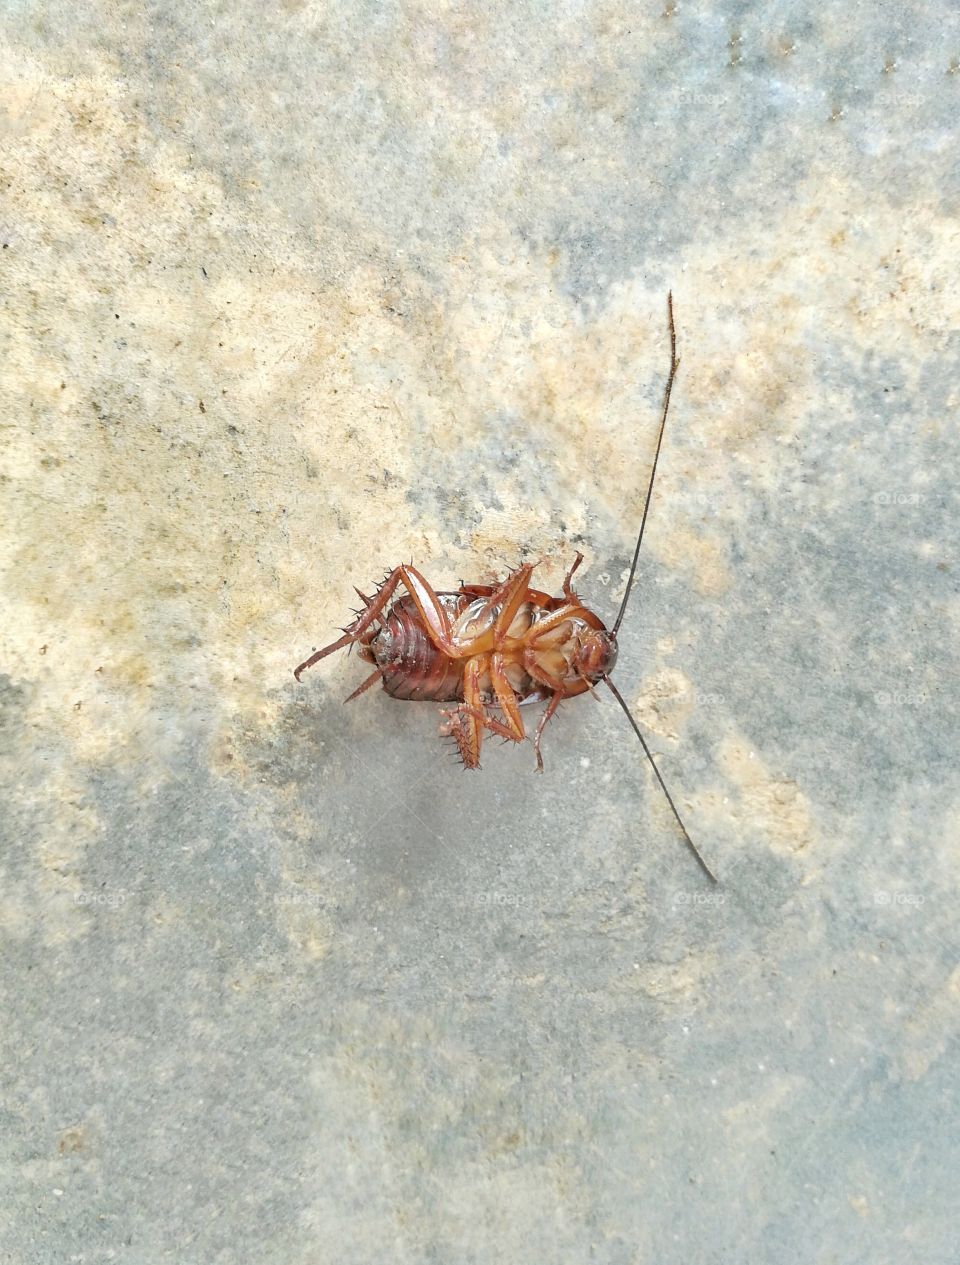 Dead cockroach on the concrete floor.